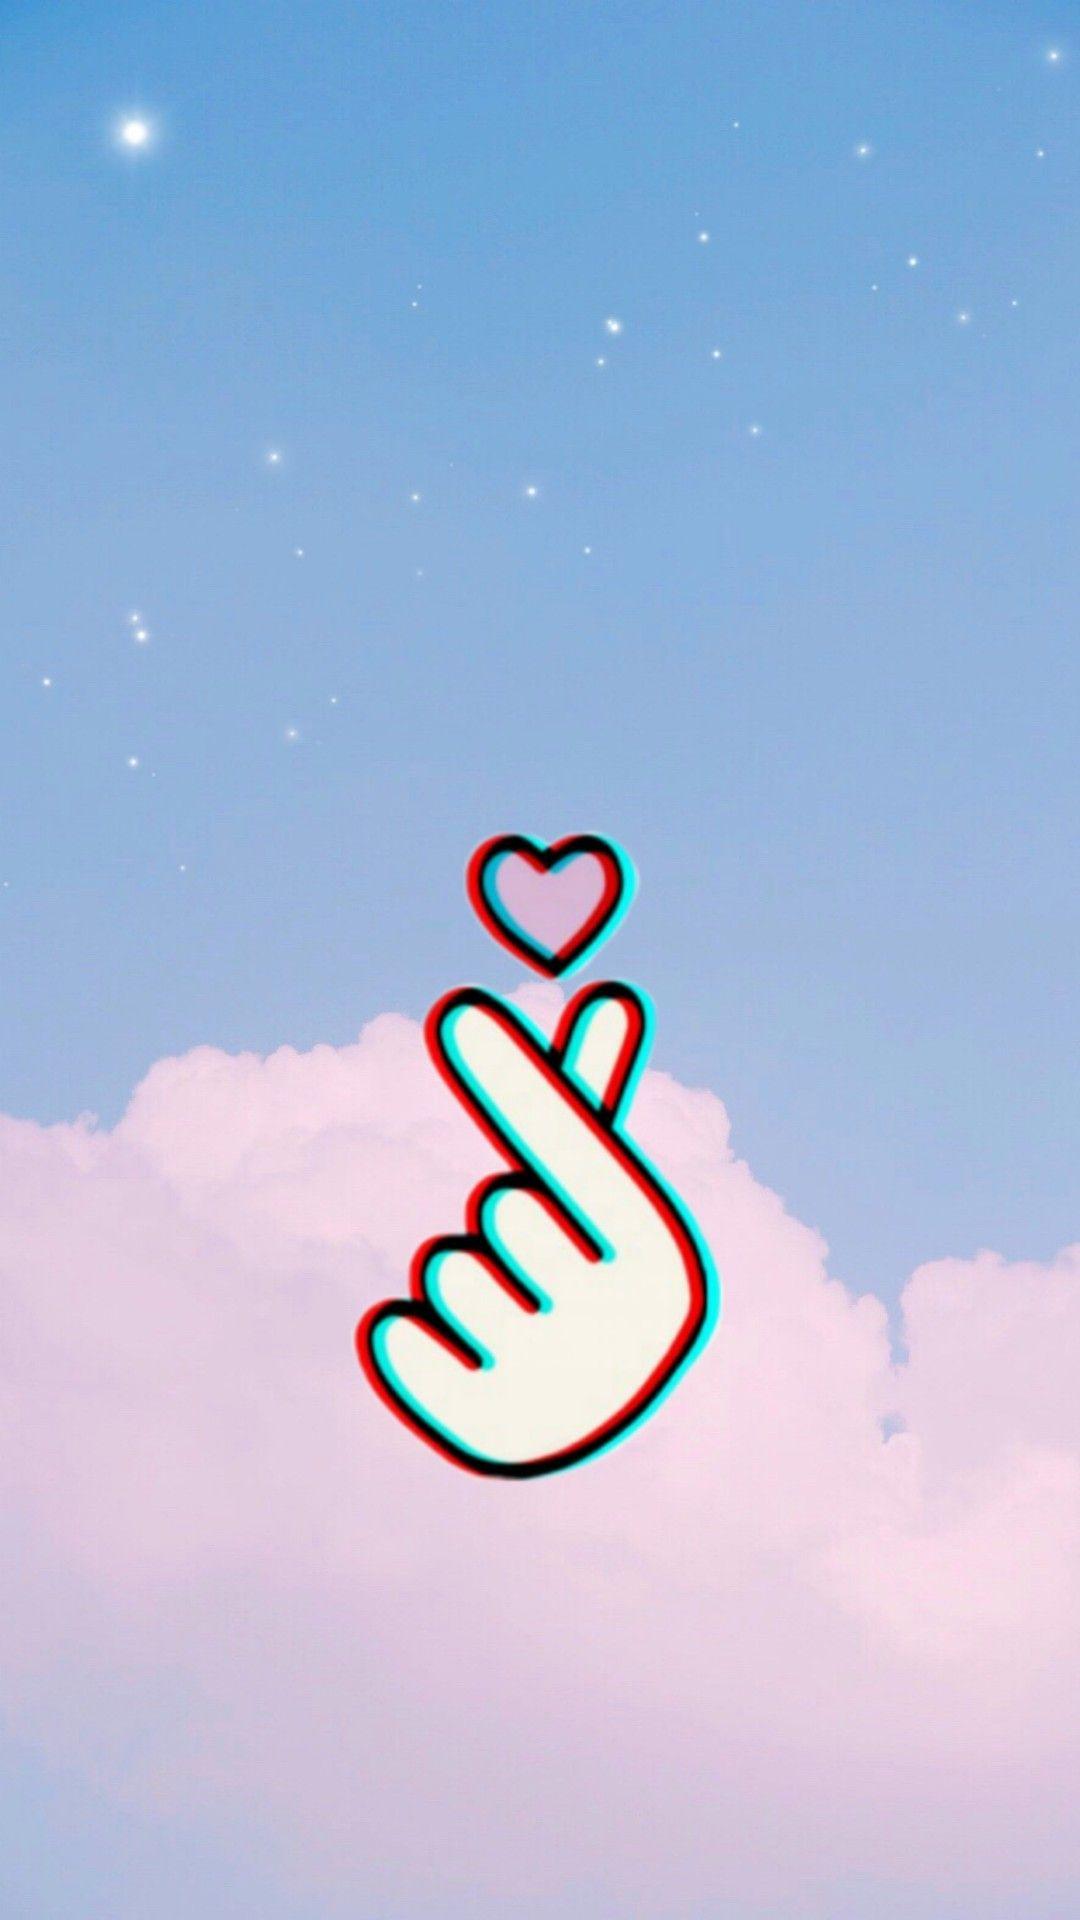 KpopWallpaper #FingerHeart #Kpop #RetroFilter #Glow. iPhone wallpaper hipster, Emoji wallpaper, Love signs